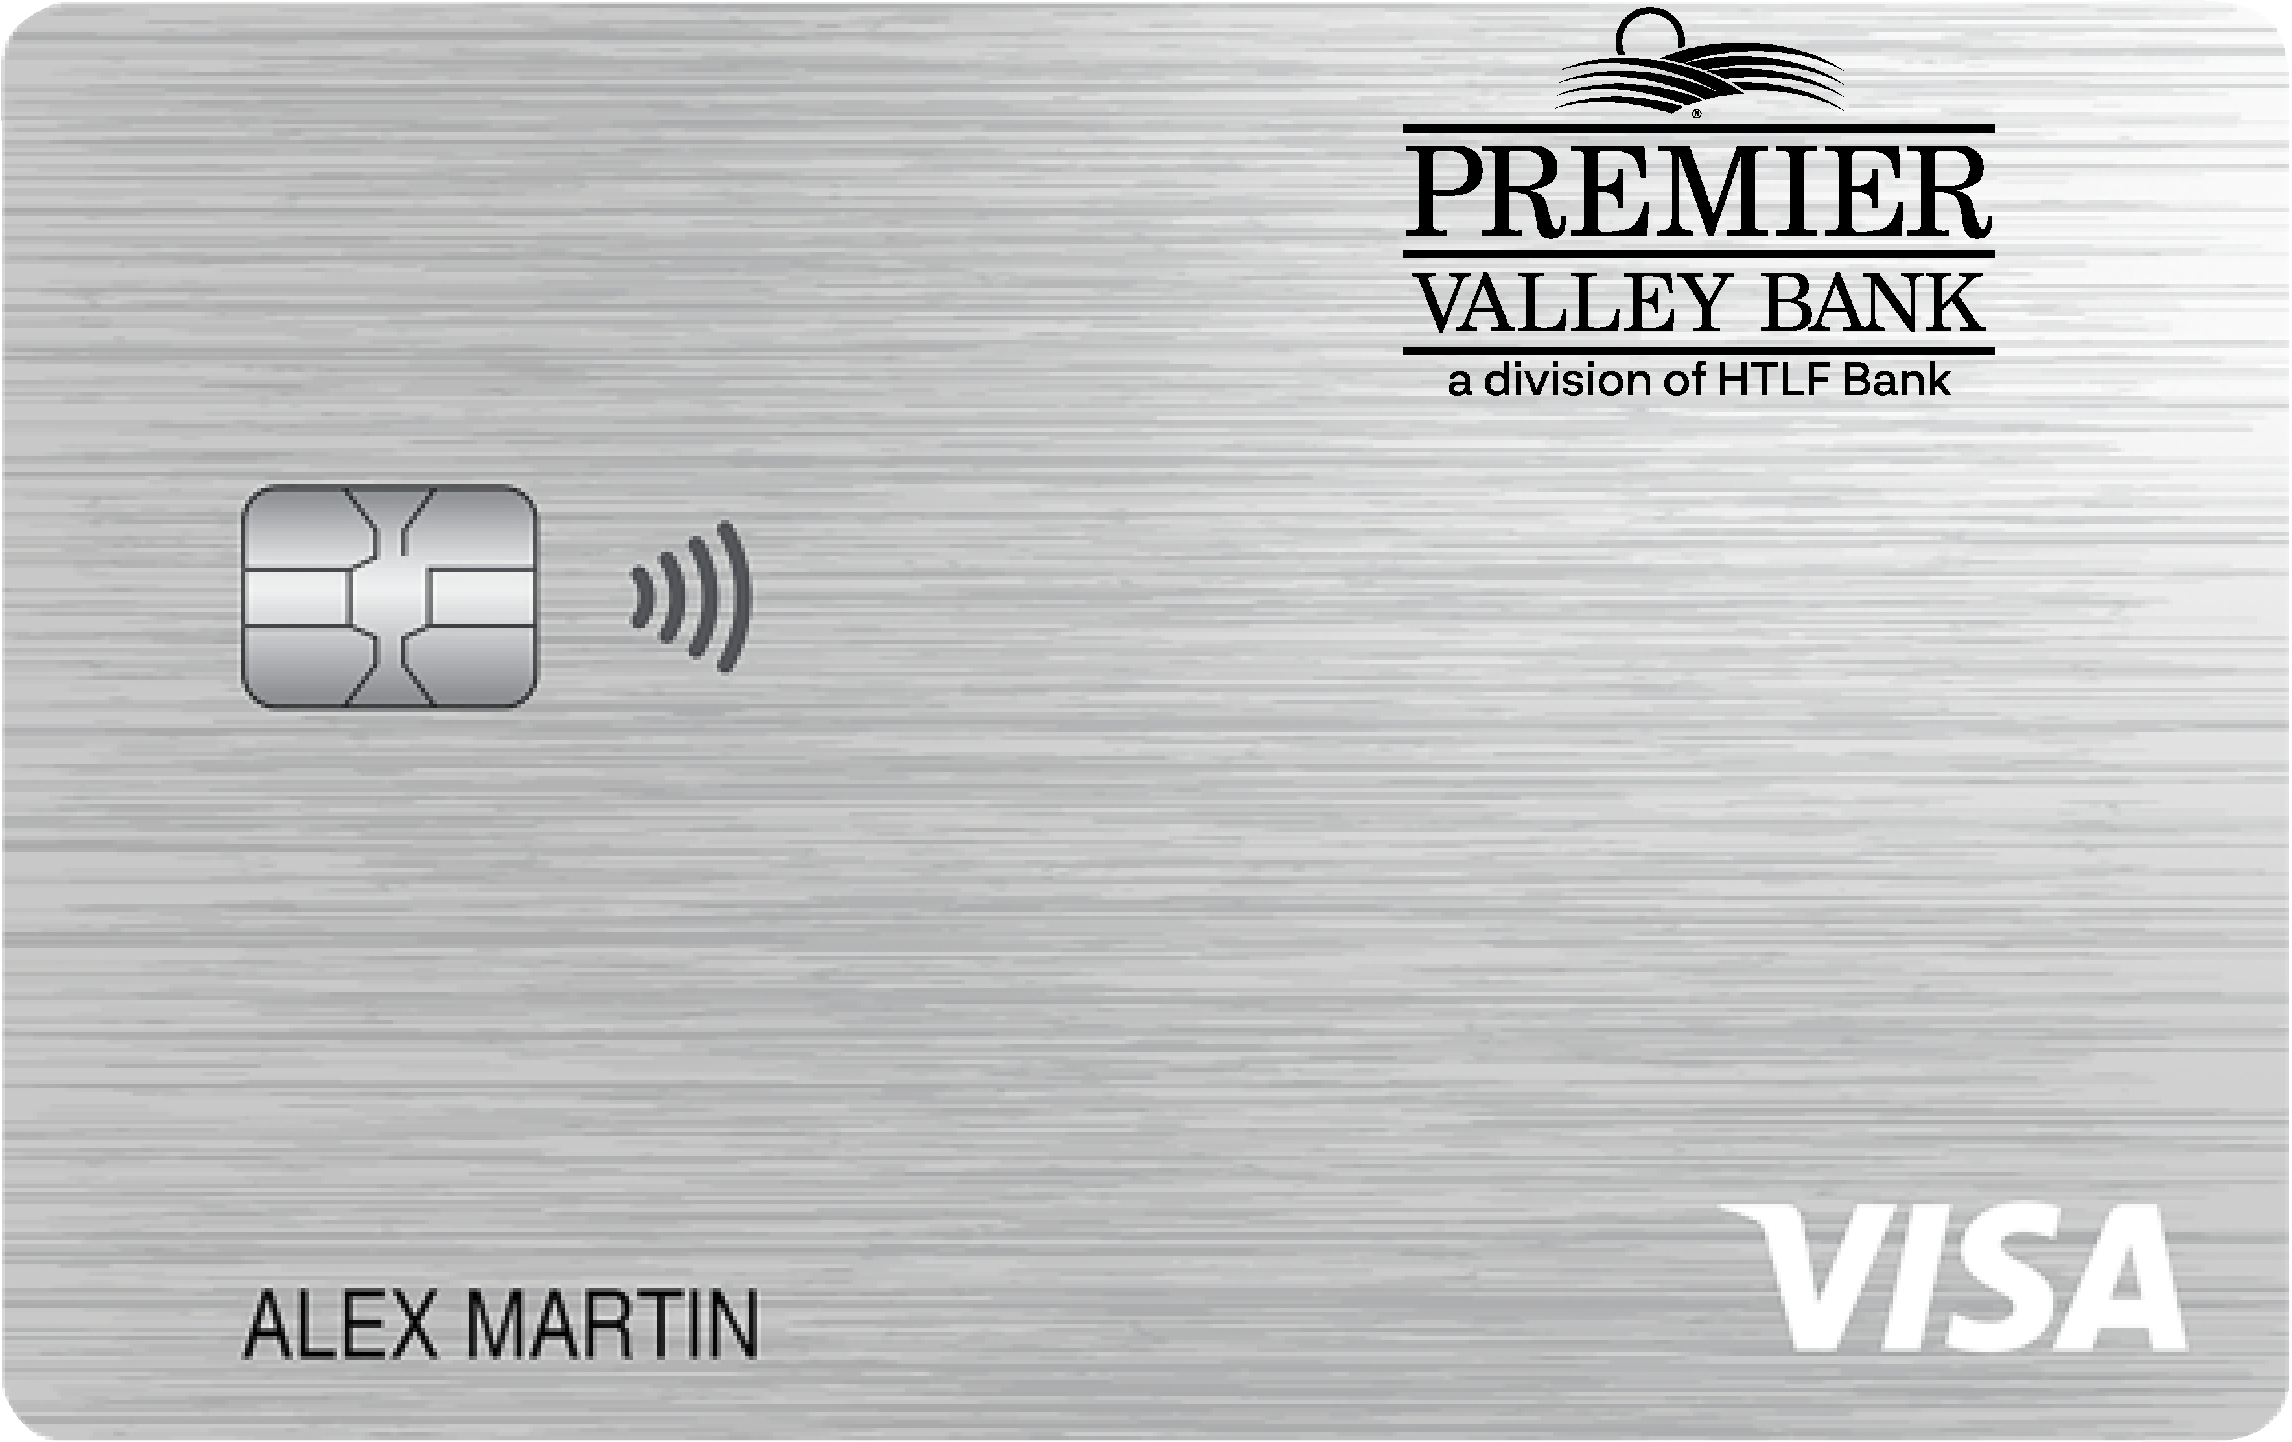 Premier Valley Bank